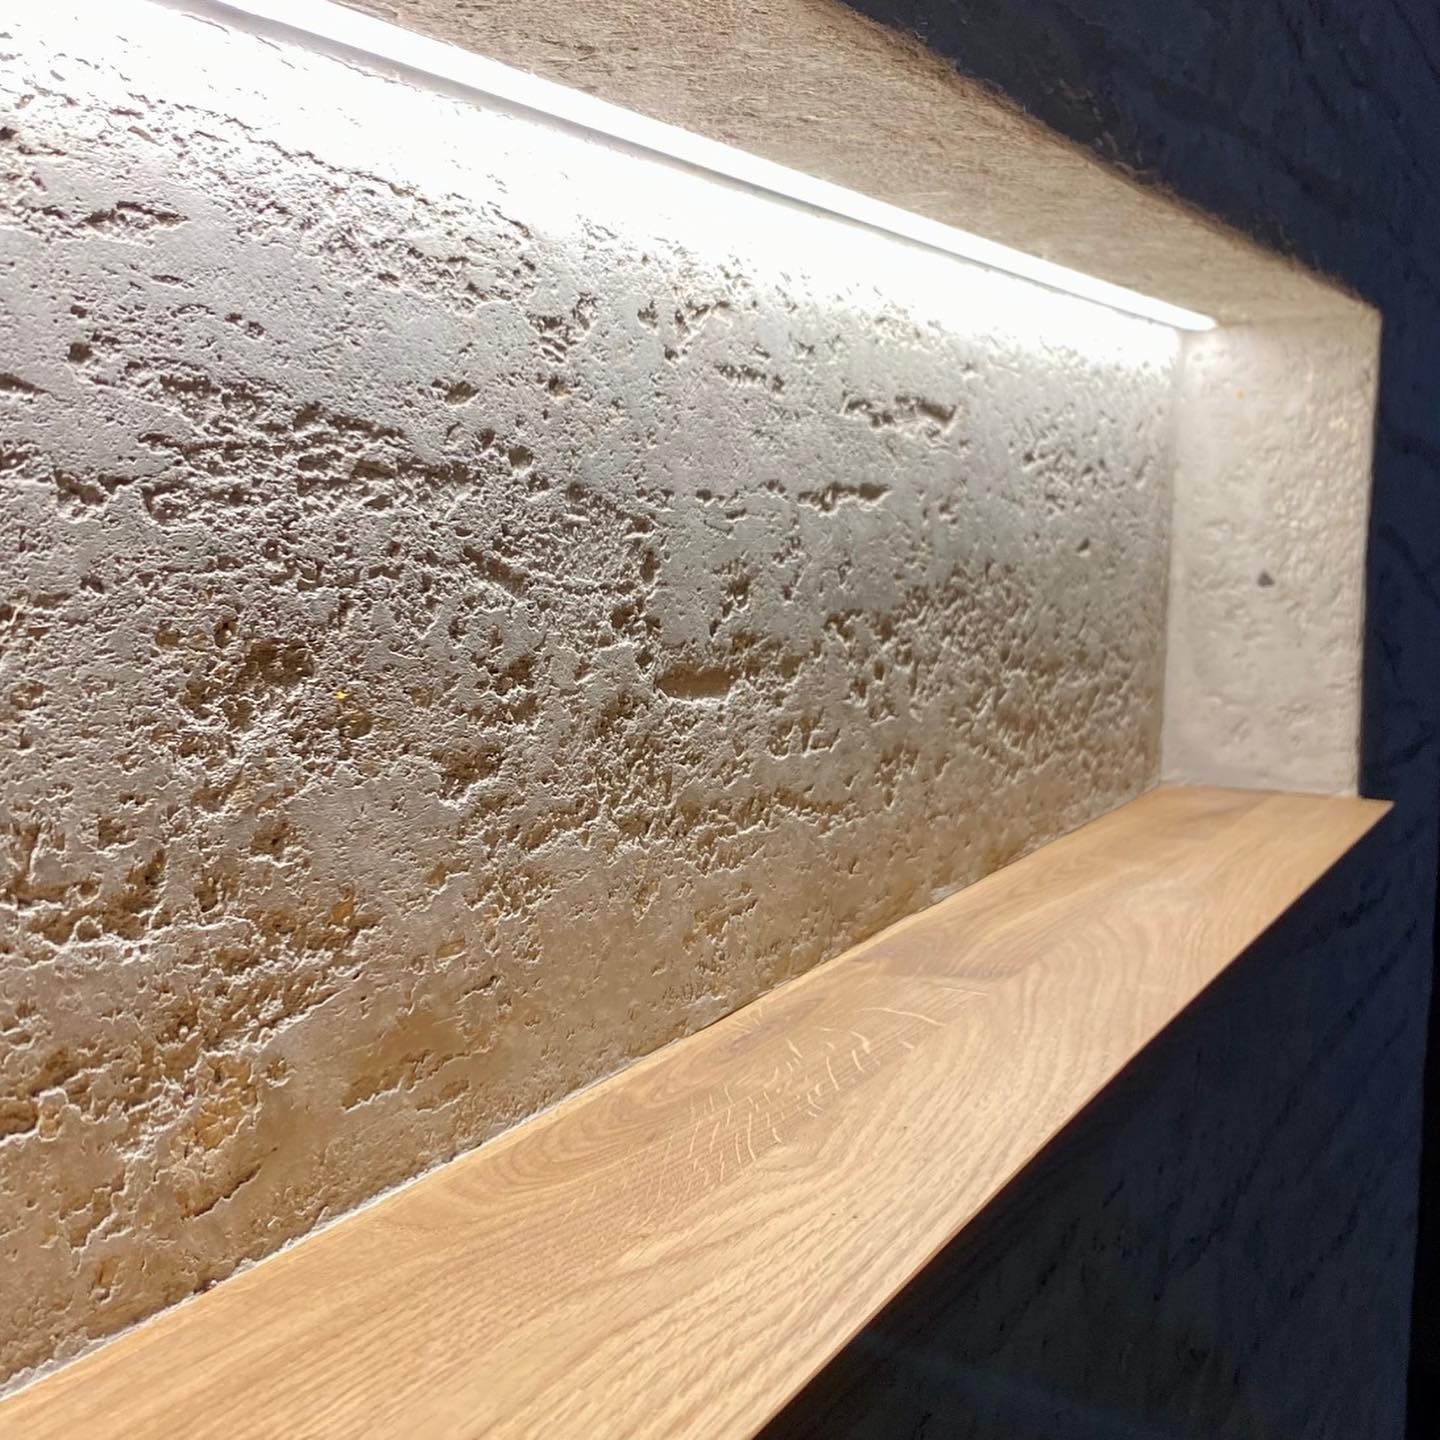 oberflächenwelt on Instagram: "Wenn die Wand zum Kunstwerk wird. ARCHI+ PIETRA INTONACO by @maler_remmele . . . #wandgestaltung #gestaltung #novacoloritalia #akzentwand #luxuswände #wandideen #innendesign #schönerwohnen #wanddeko #oberflächenwelt #oberflaechenwelt #interiordesign #decor #pietra #luxury #renovieren"